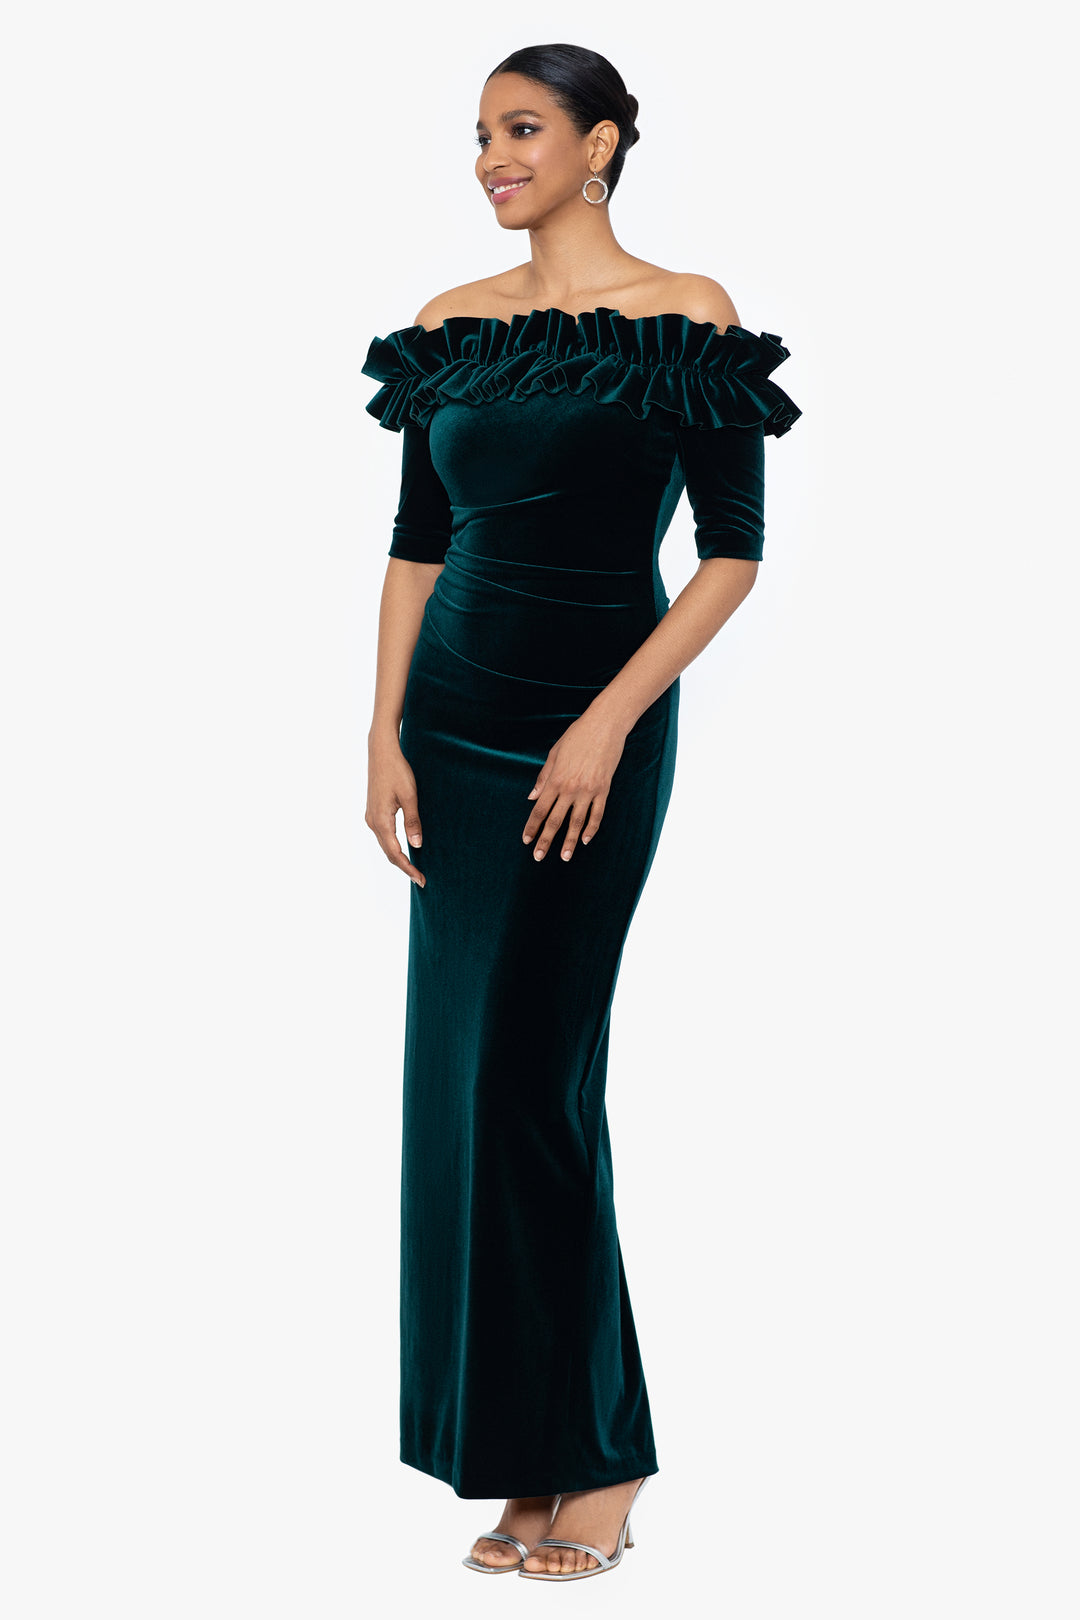 "Tiffany" Long Velvet 3/4 Sleeve Ruffle Top Dress